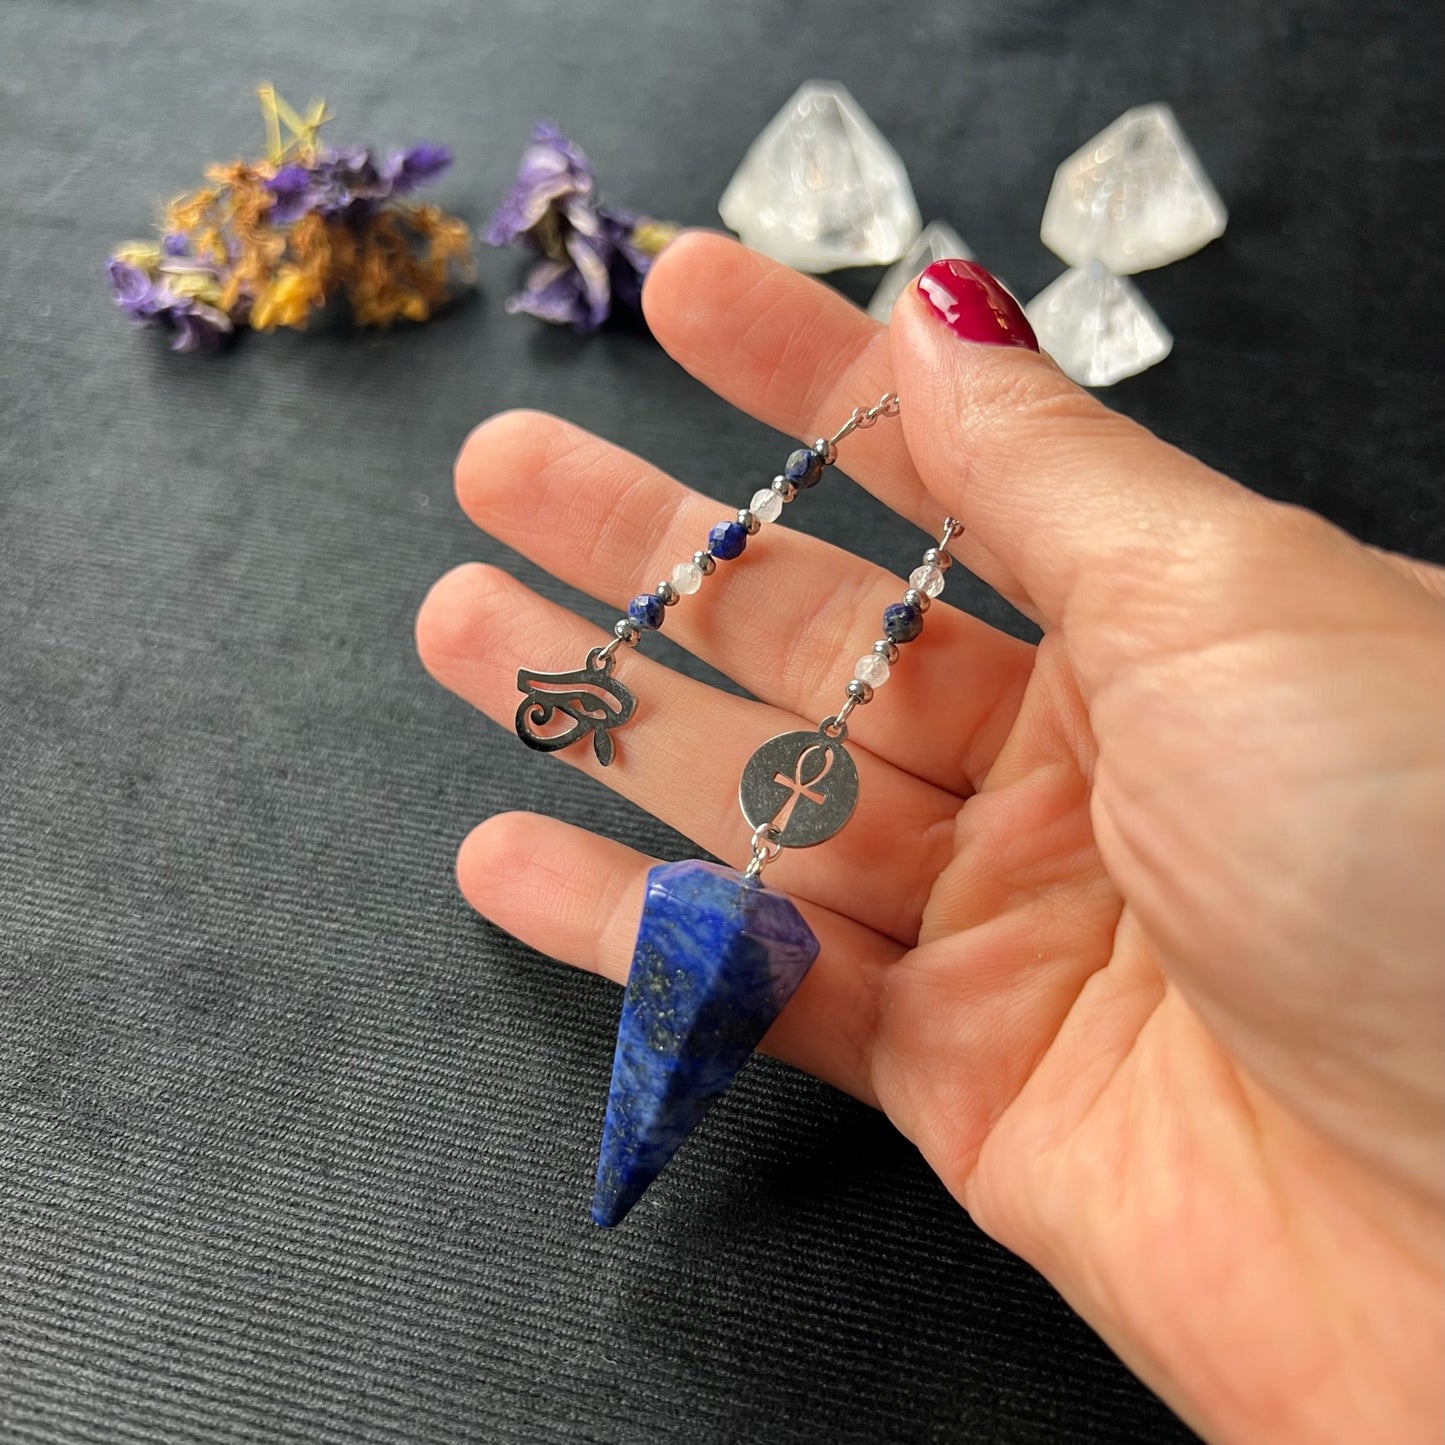 Gemstone pendulum lapis lazuli, moonstone, and stainless steel Eye of Horus Ankh divination tool crystal pendulum